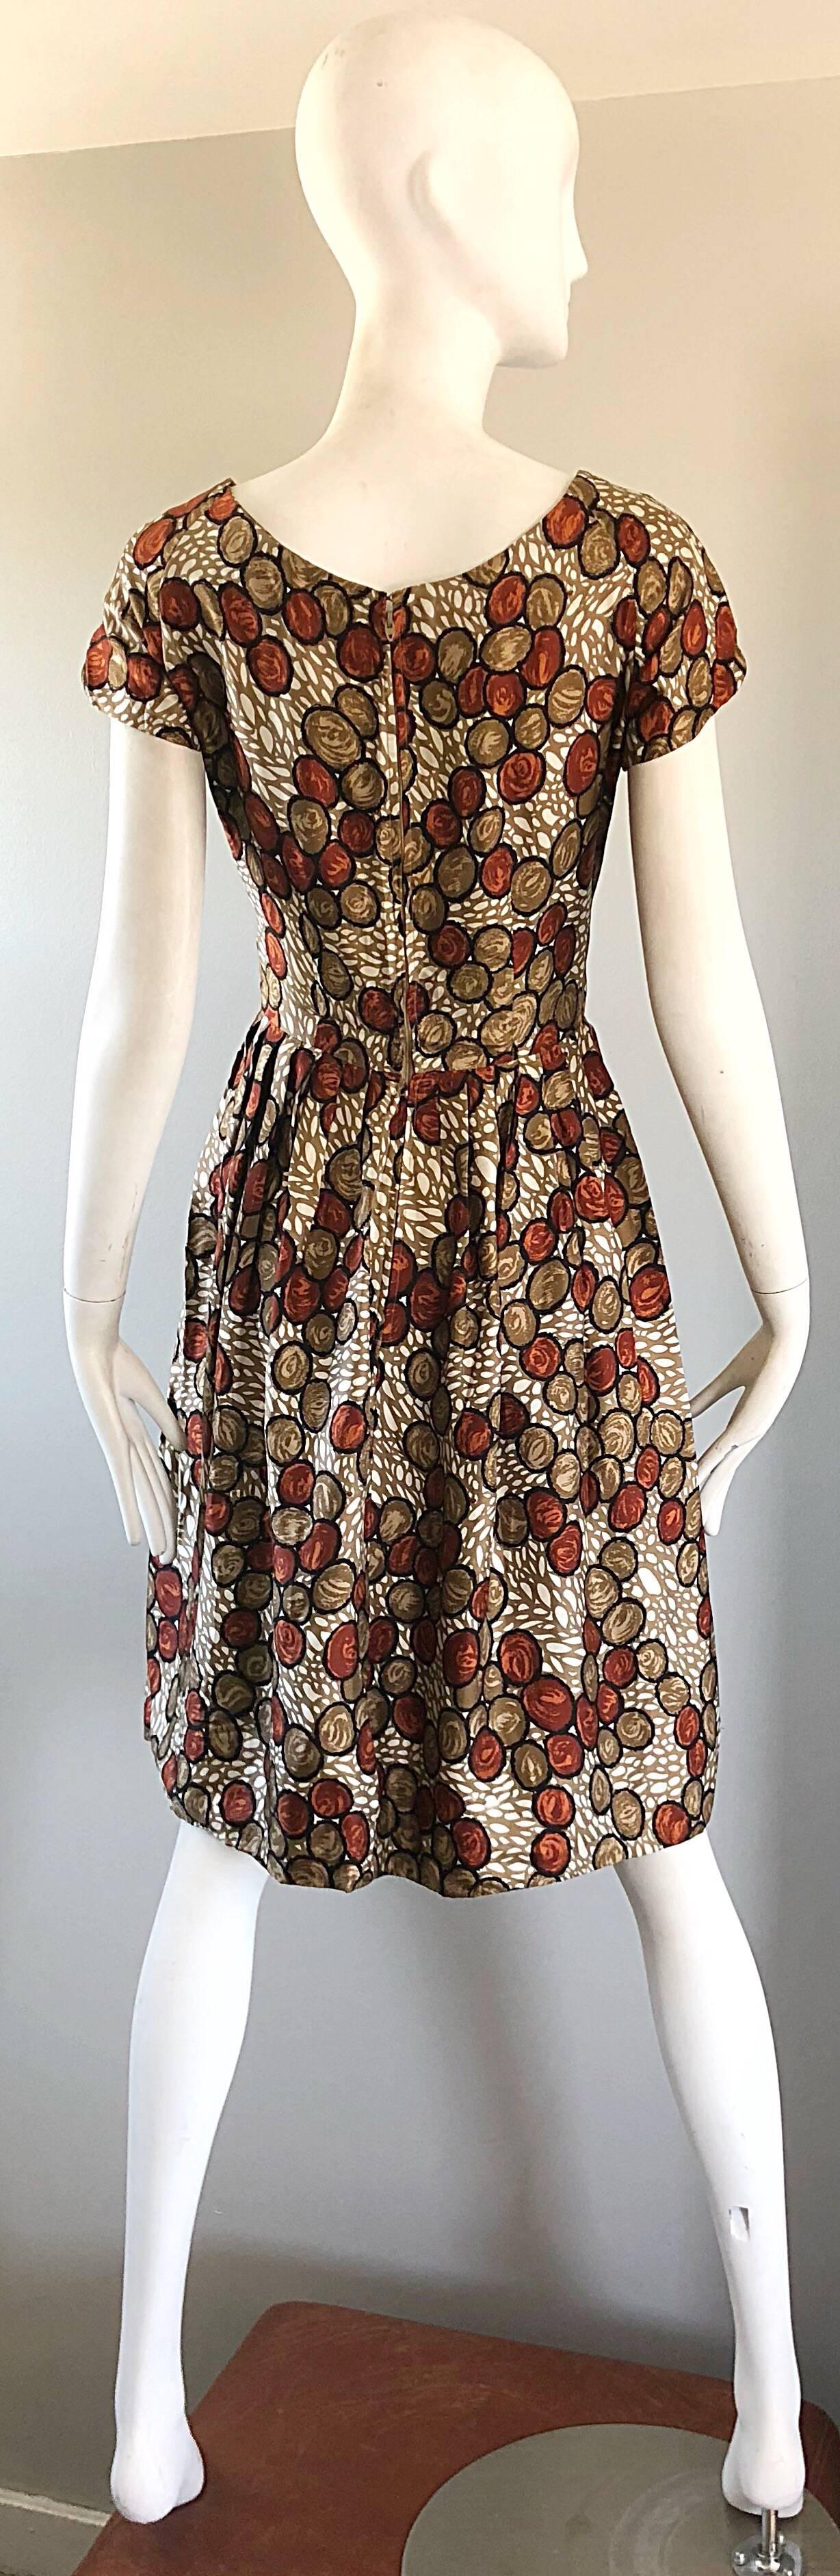 Women's 1950s Walnut Nut Print Fit n ' Flare Brown Beige Ivory Silk 50s Vintage Dress 